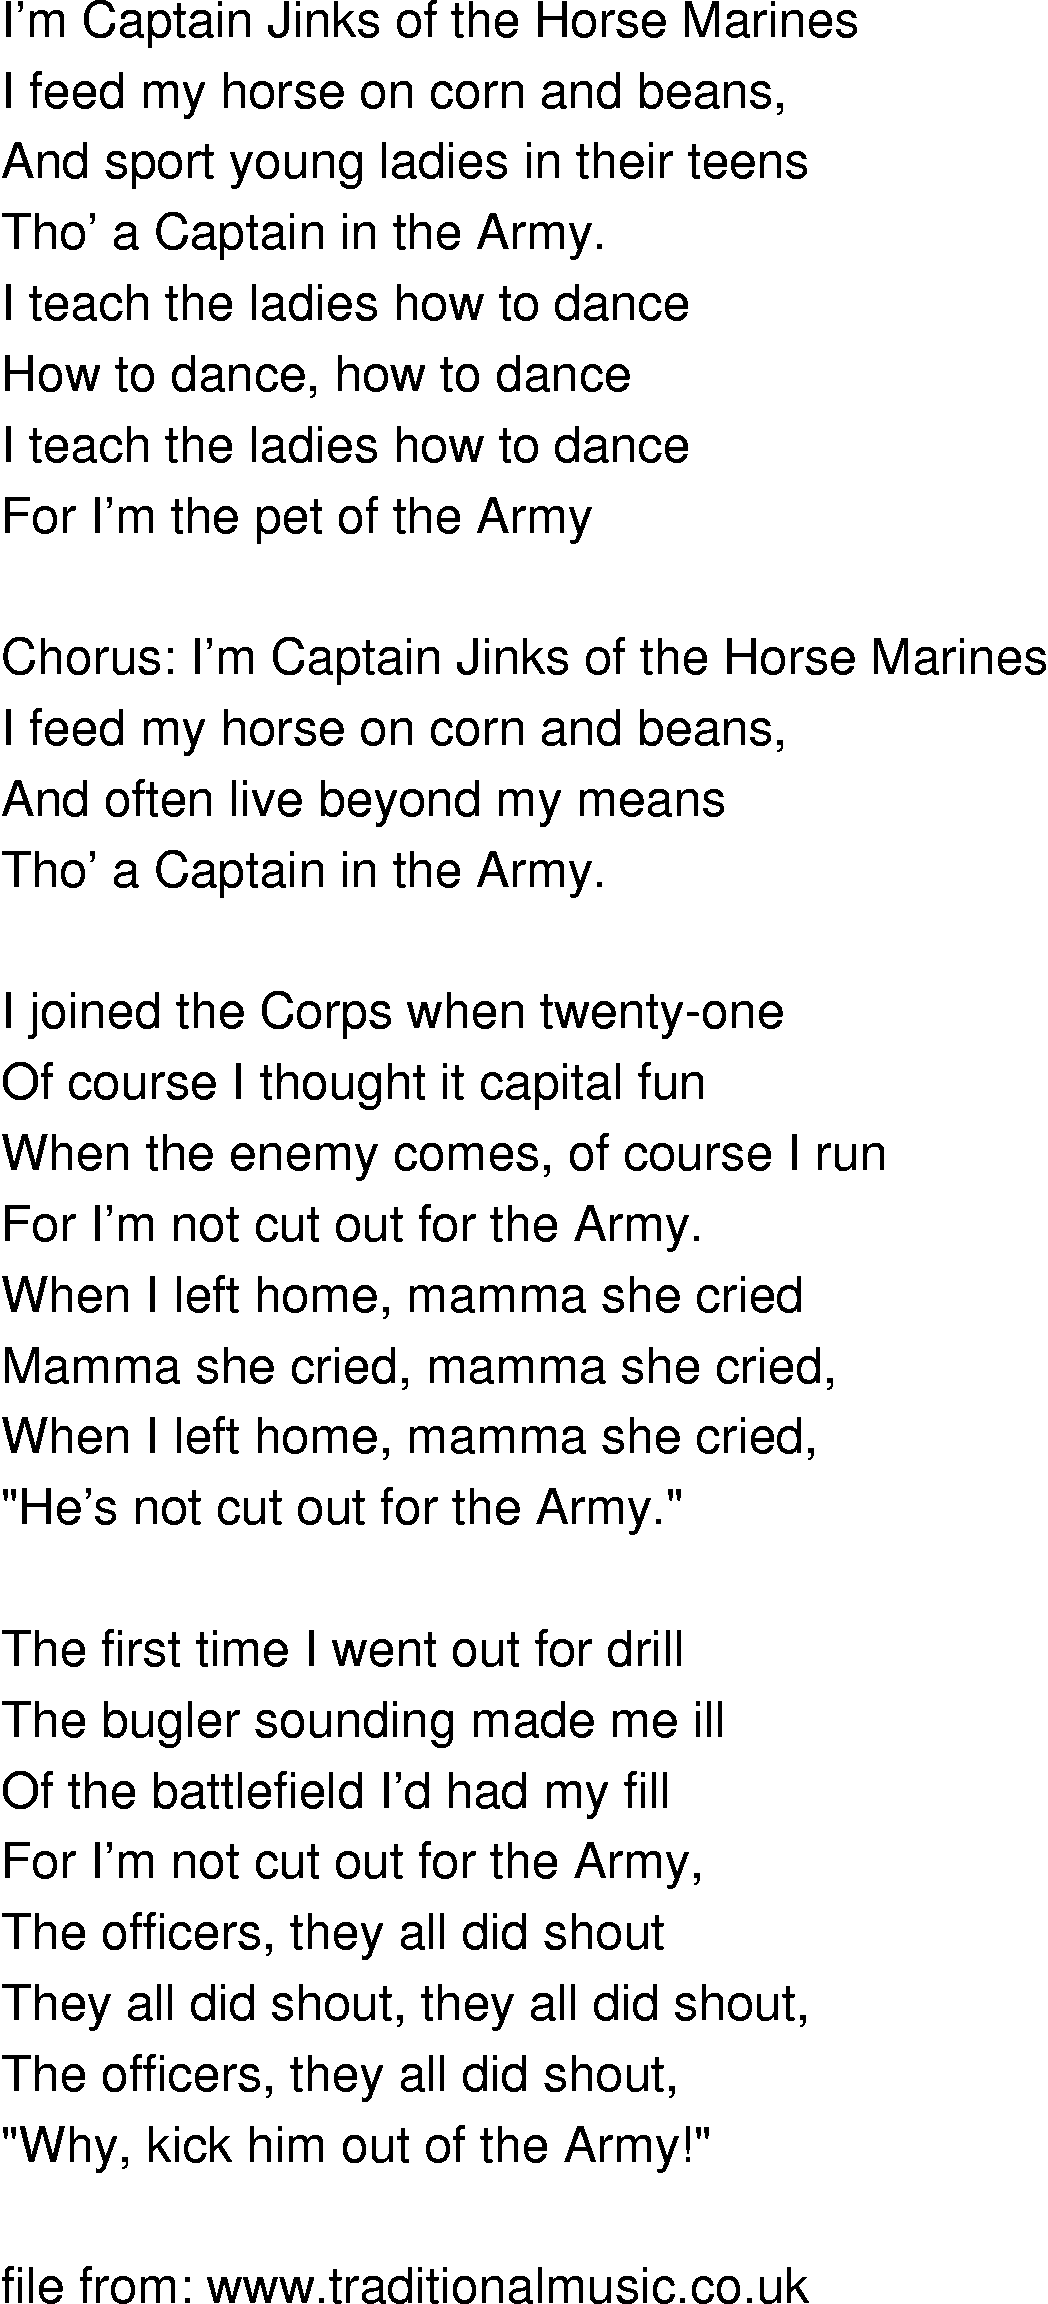 Old-Time (oldtimey) Song Lyrics - captain jinks